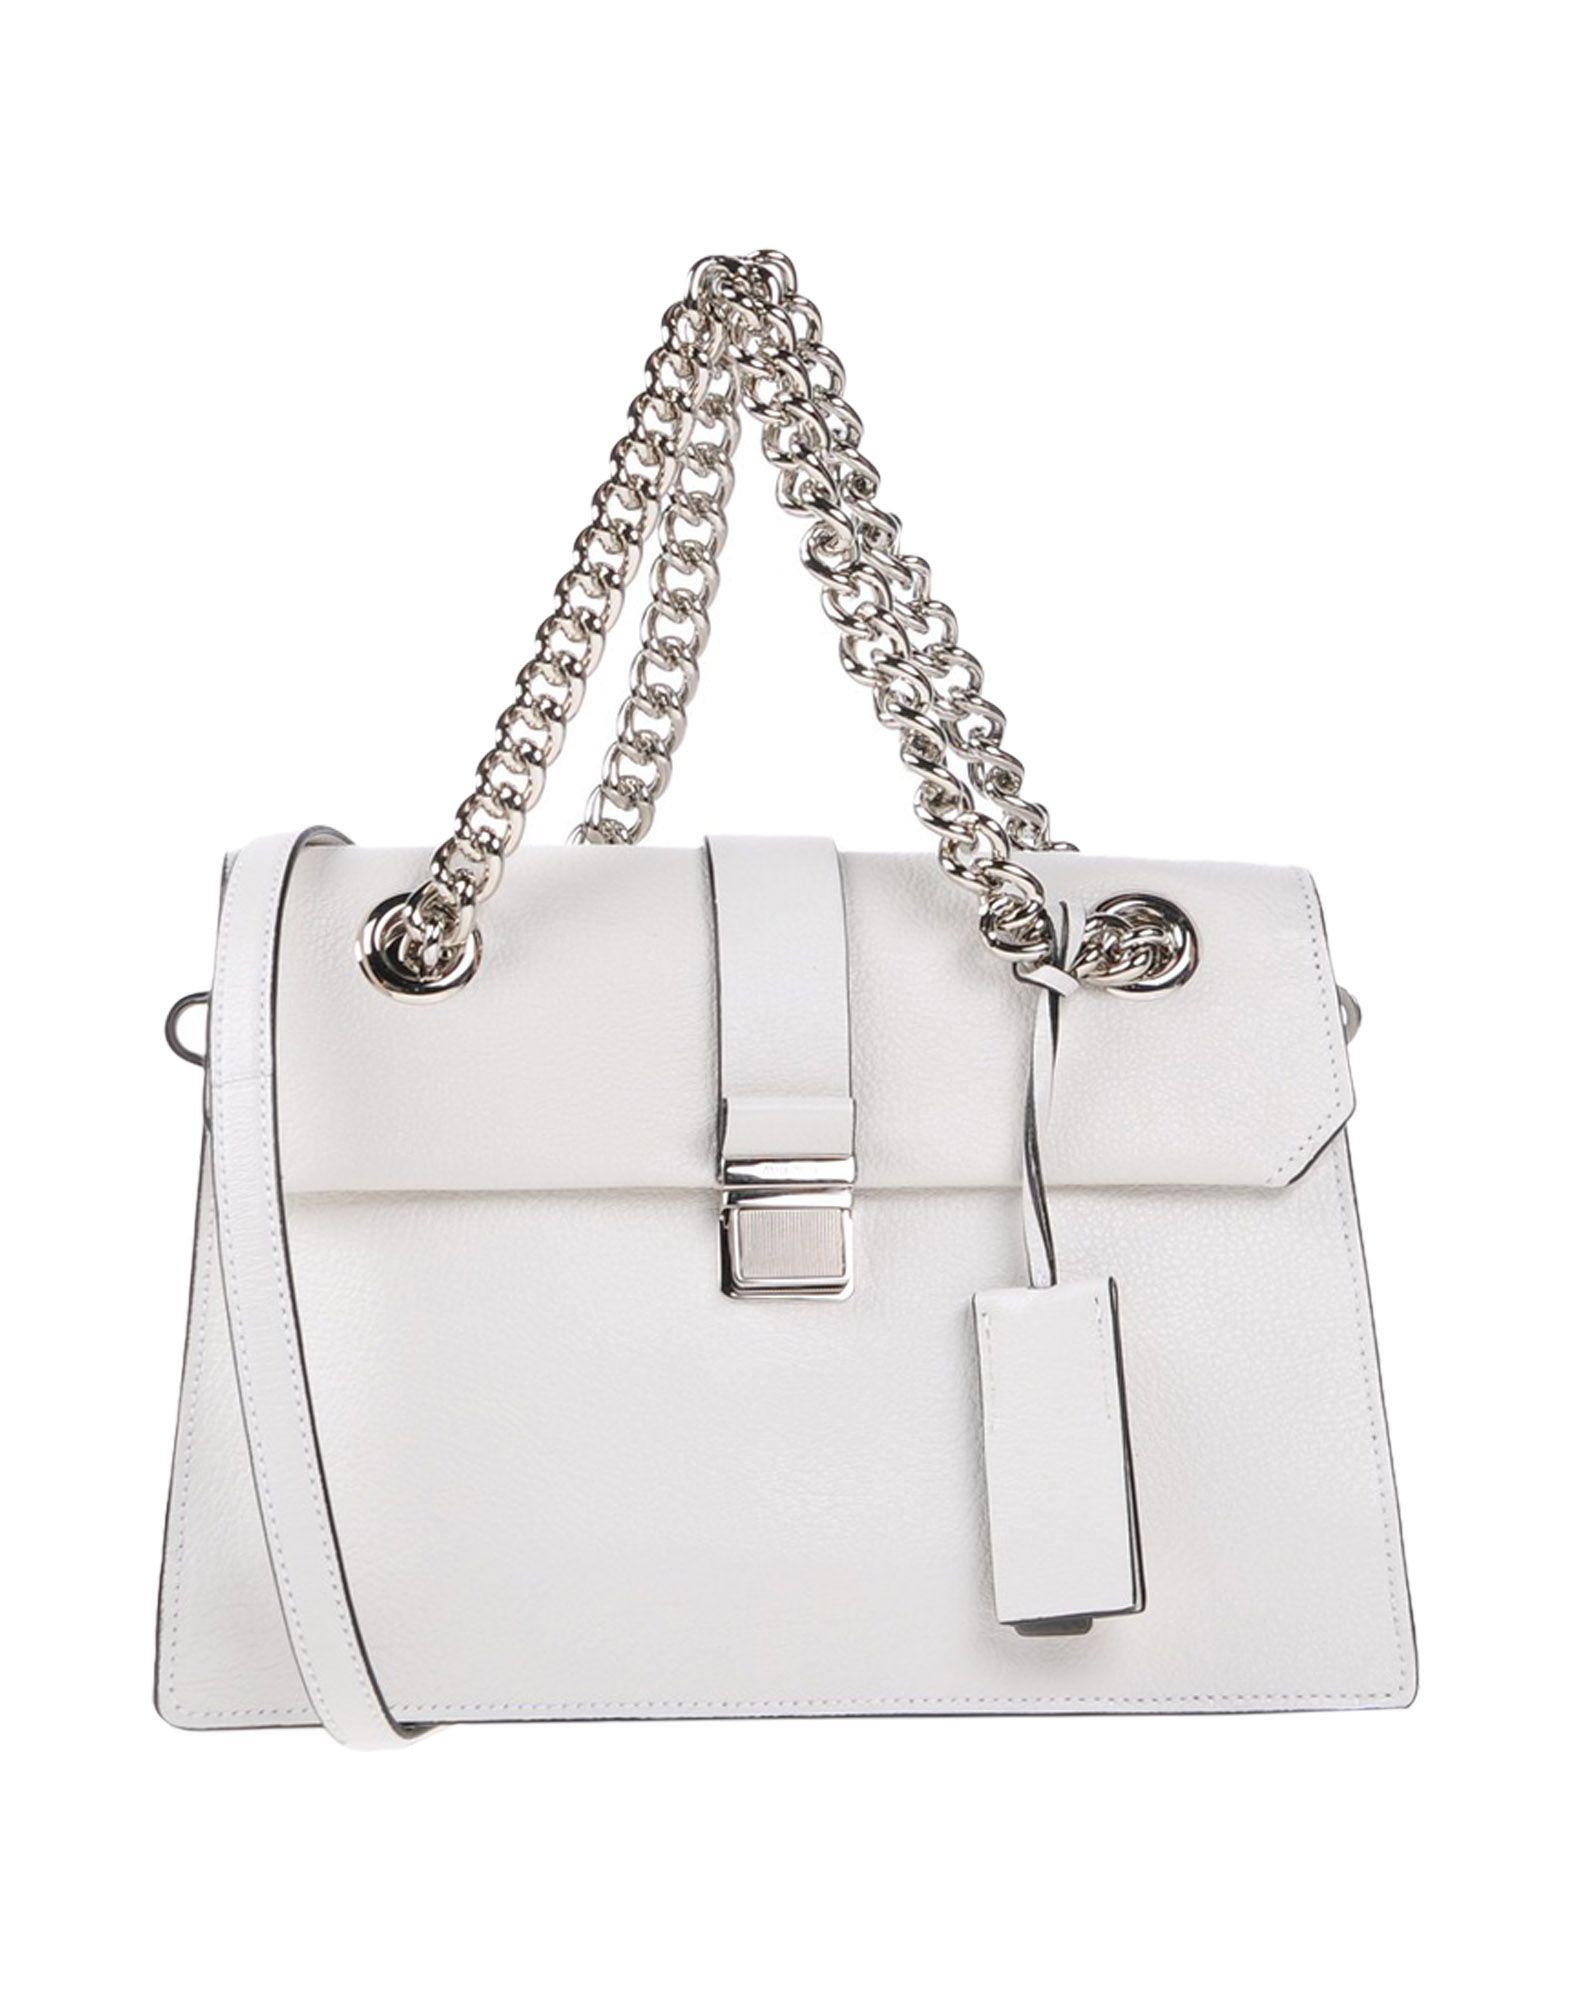 Miu Miu Leather Handbag in White - Lyst